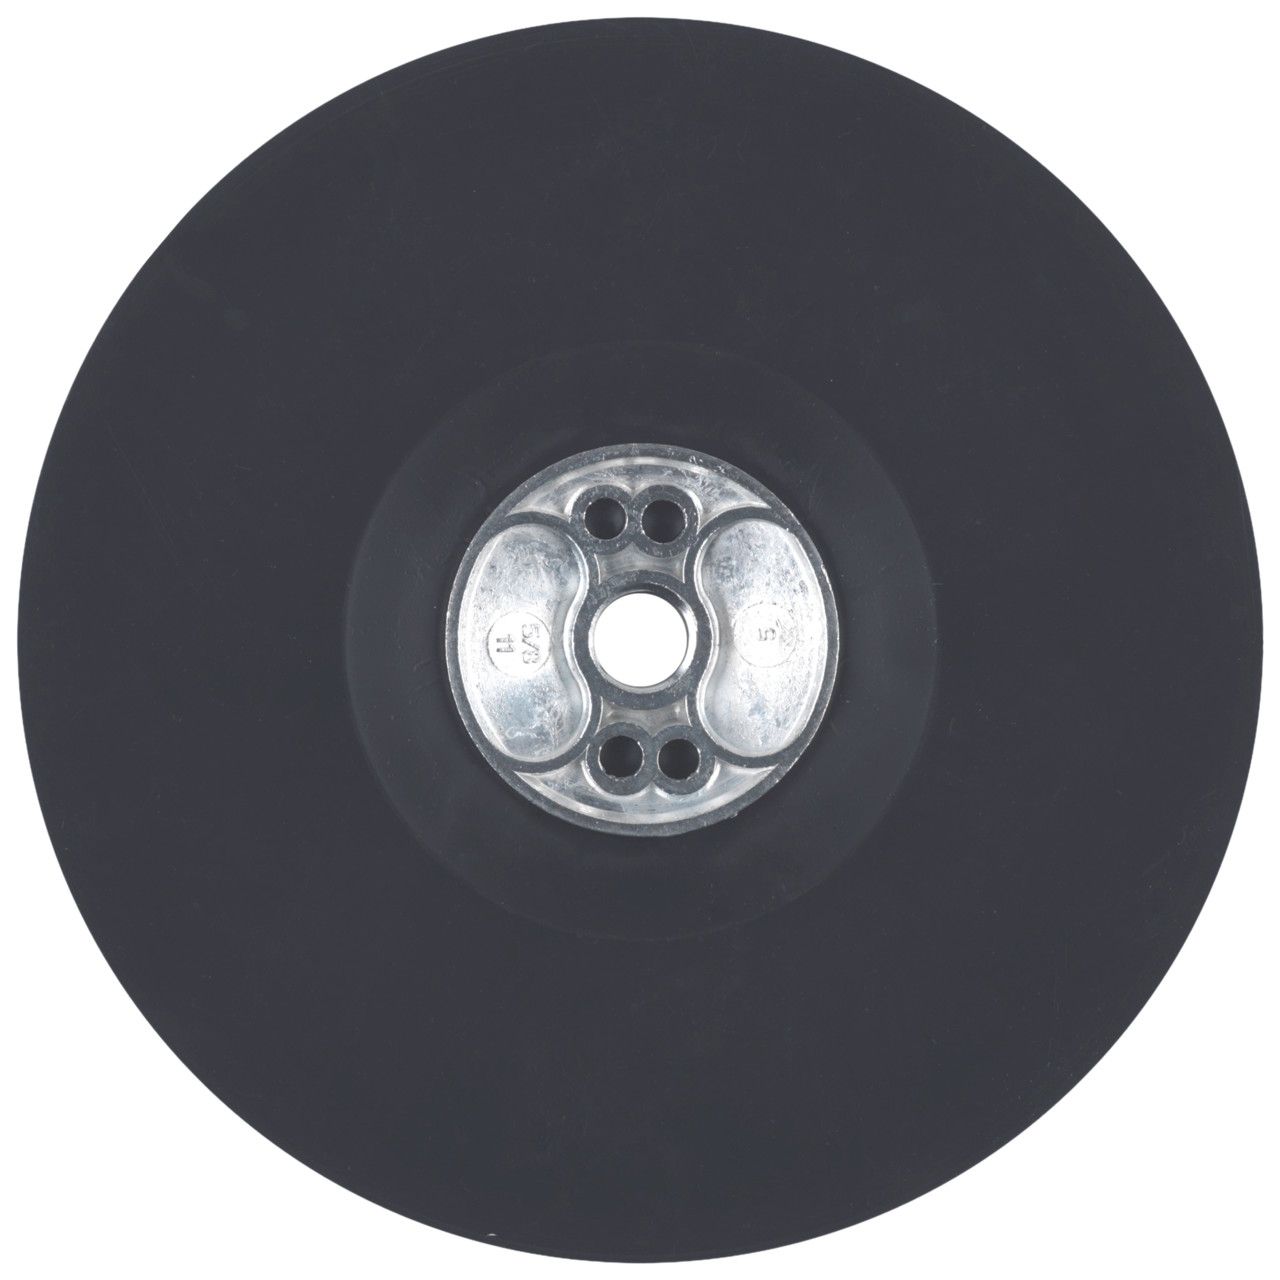 Tyrolit Accesorios para discos de fibra 115 x 22 #PAD FIBER 115x22 5/8 B HARD